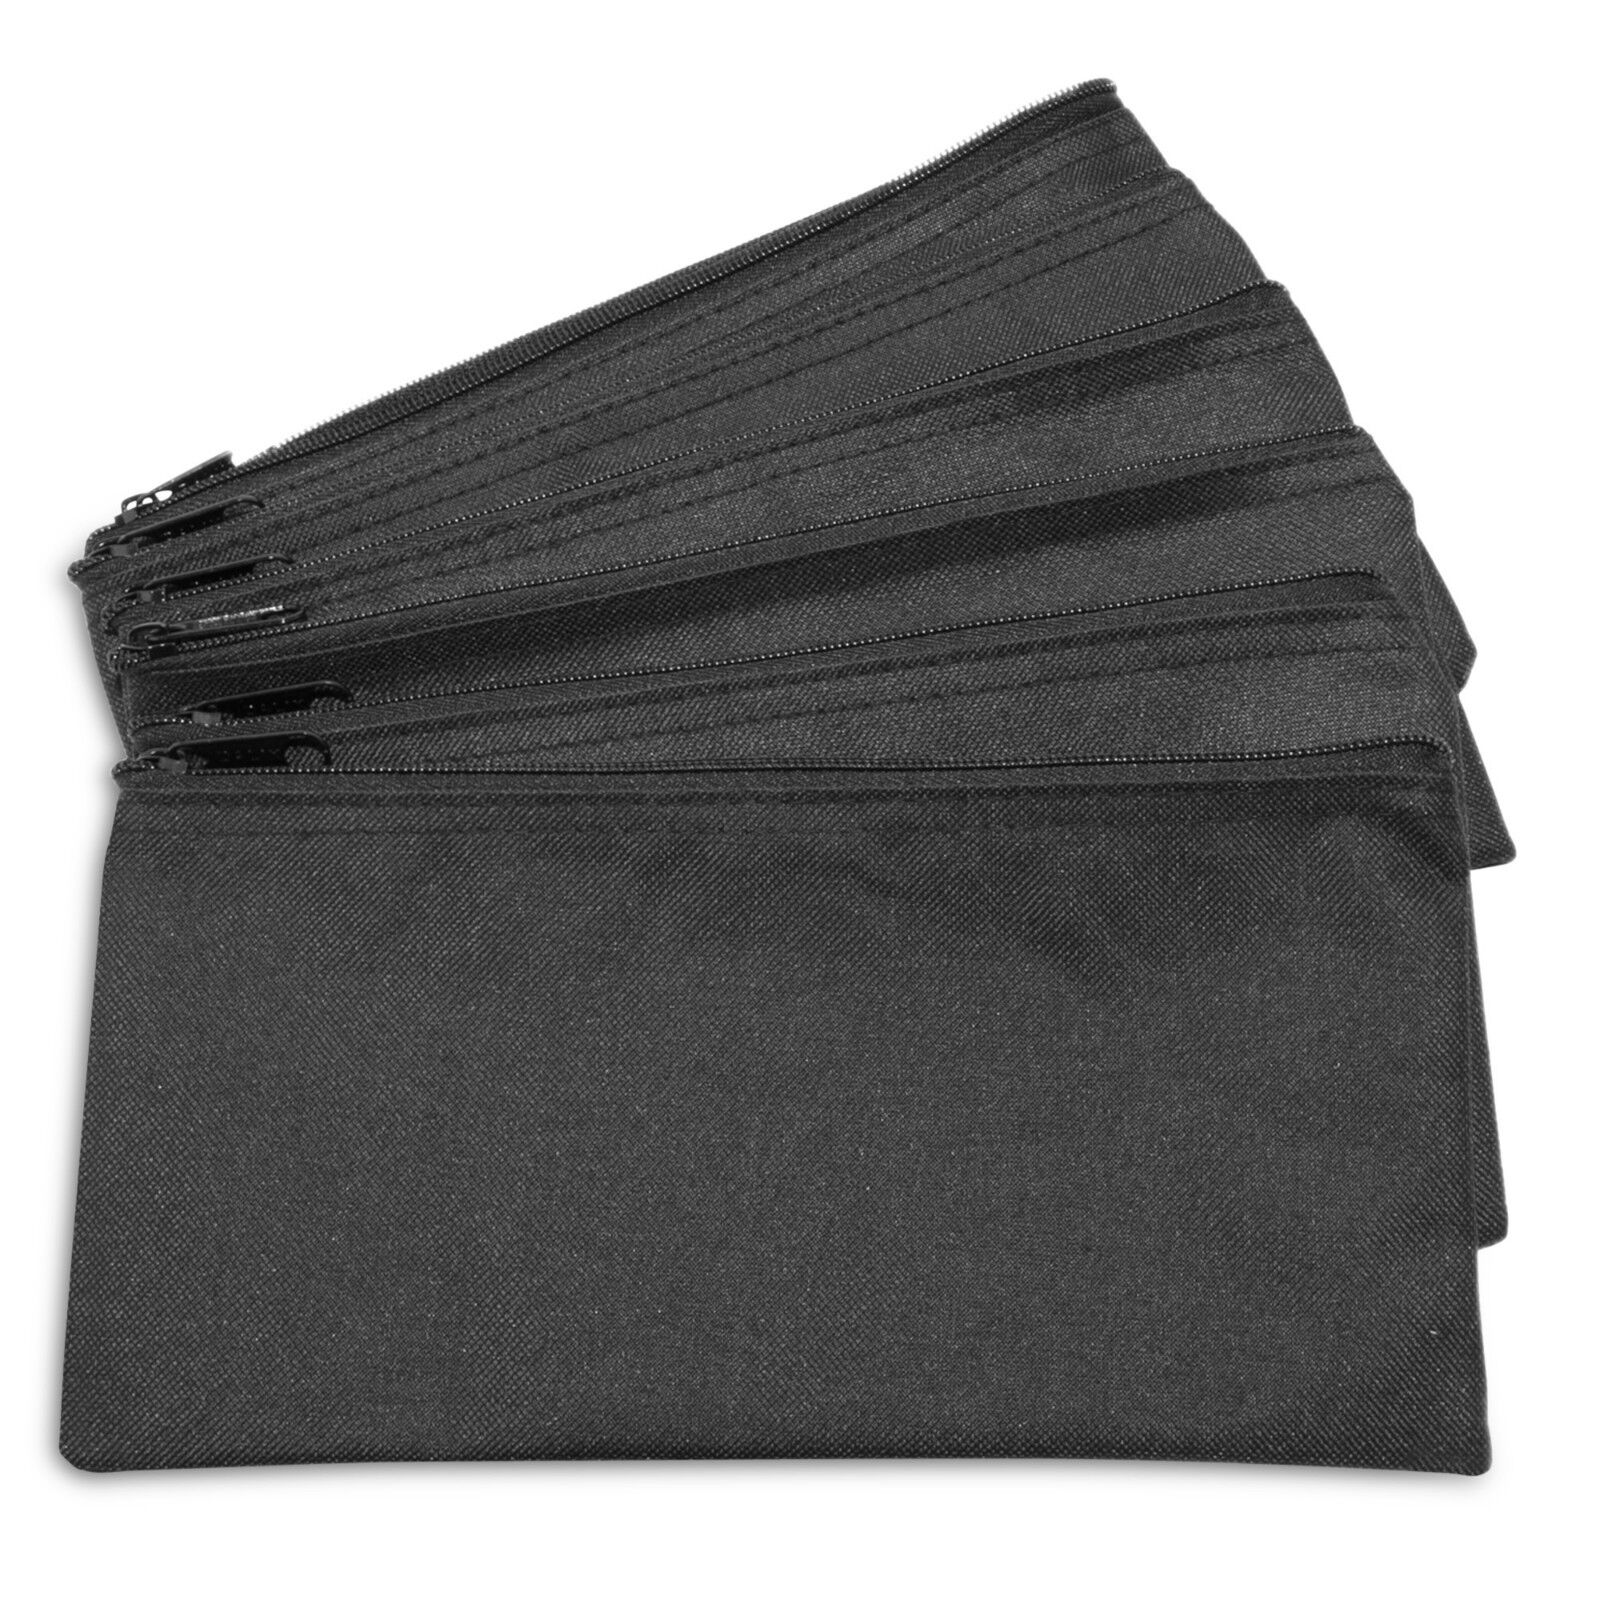 DALIX Zipper Bank Deposit Money Bags Cash Coin Pouch 6 Pack in Black